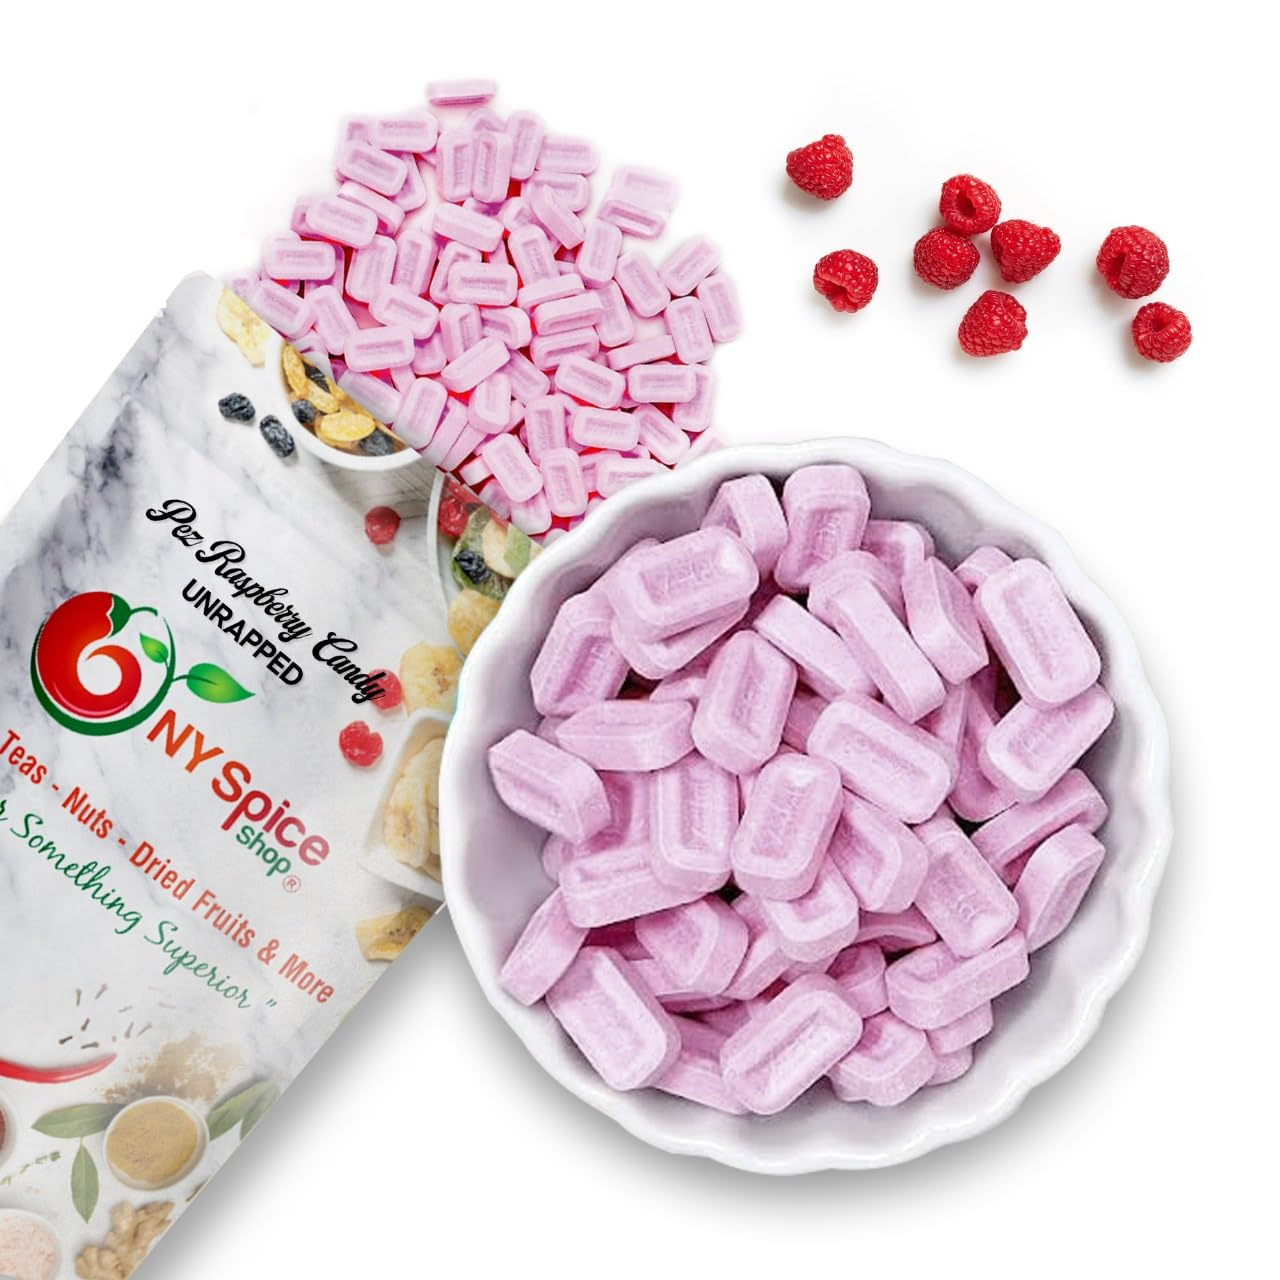 PEZ Raspberry Candy Unwrapped - NY Spice Shop